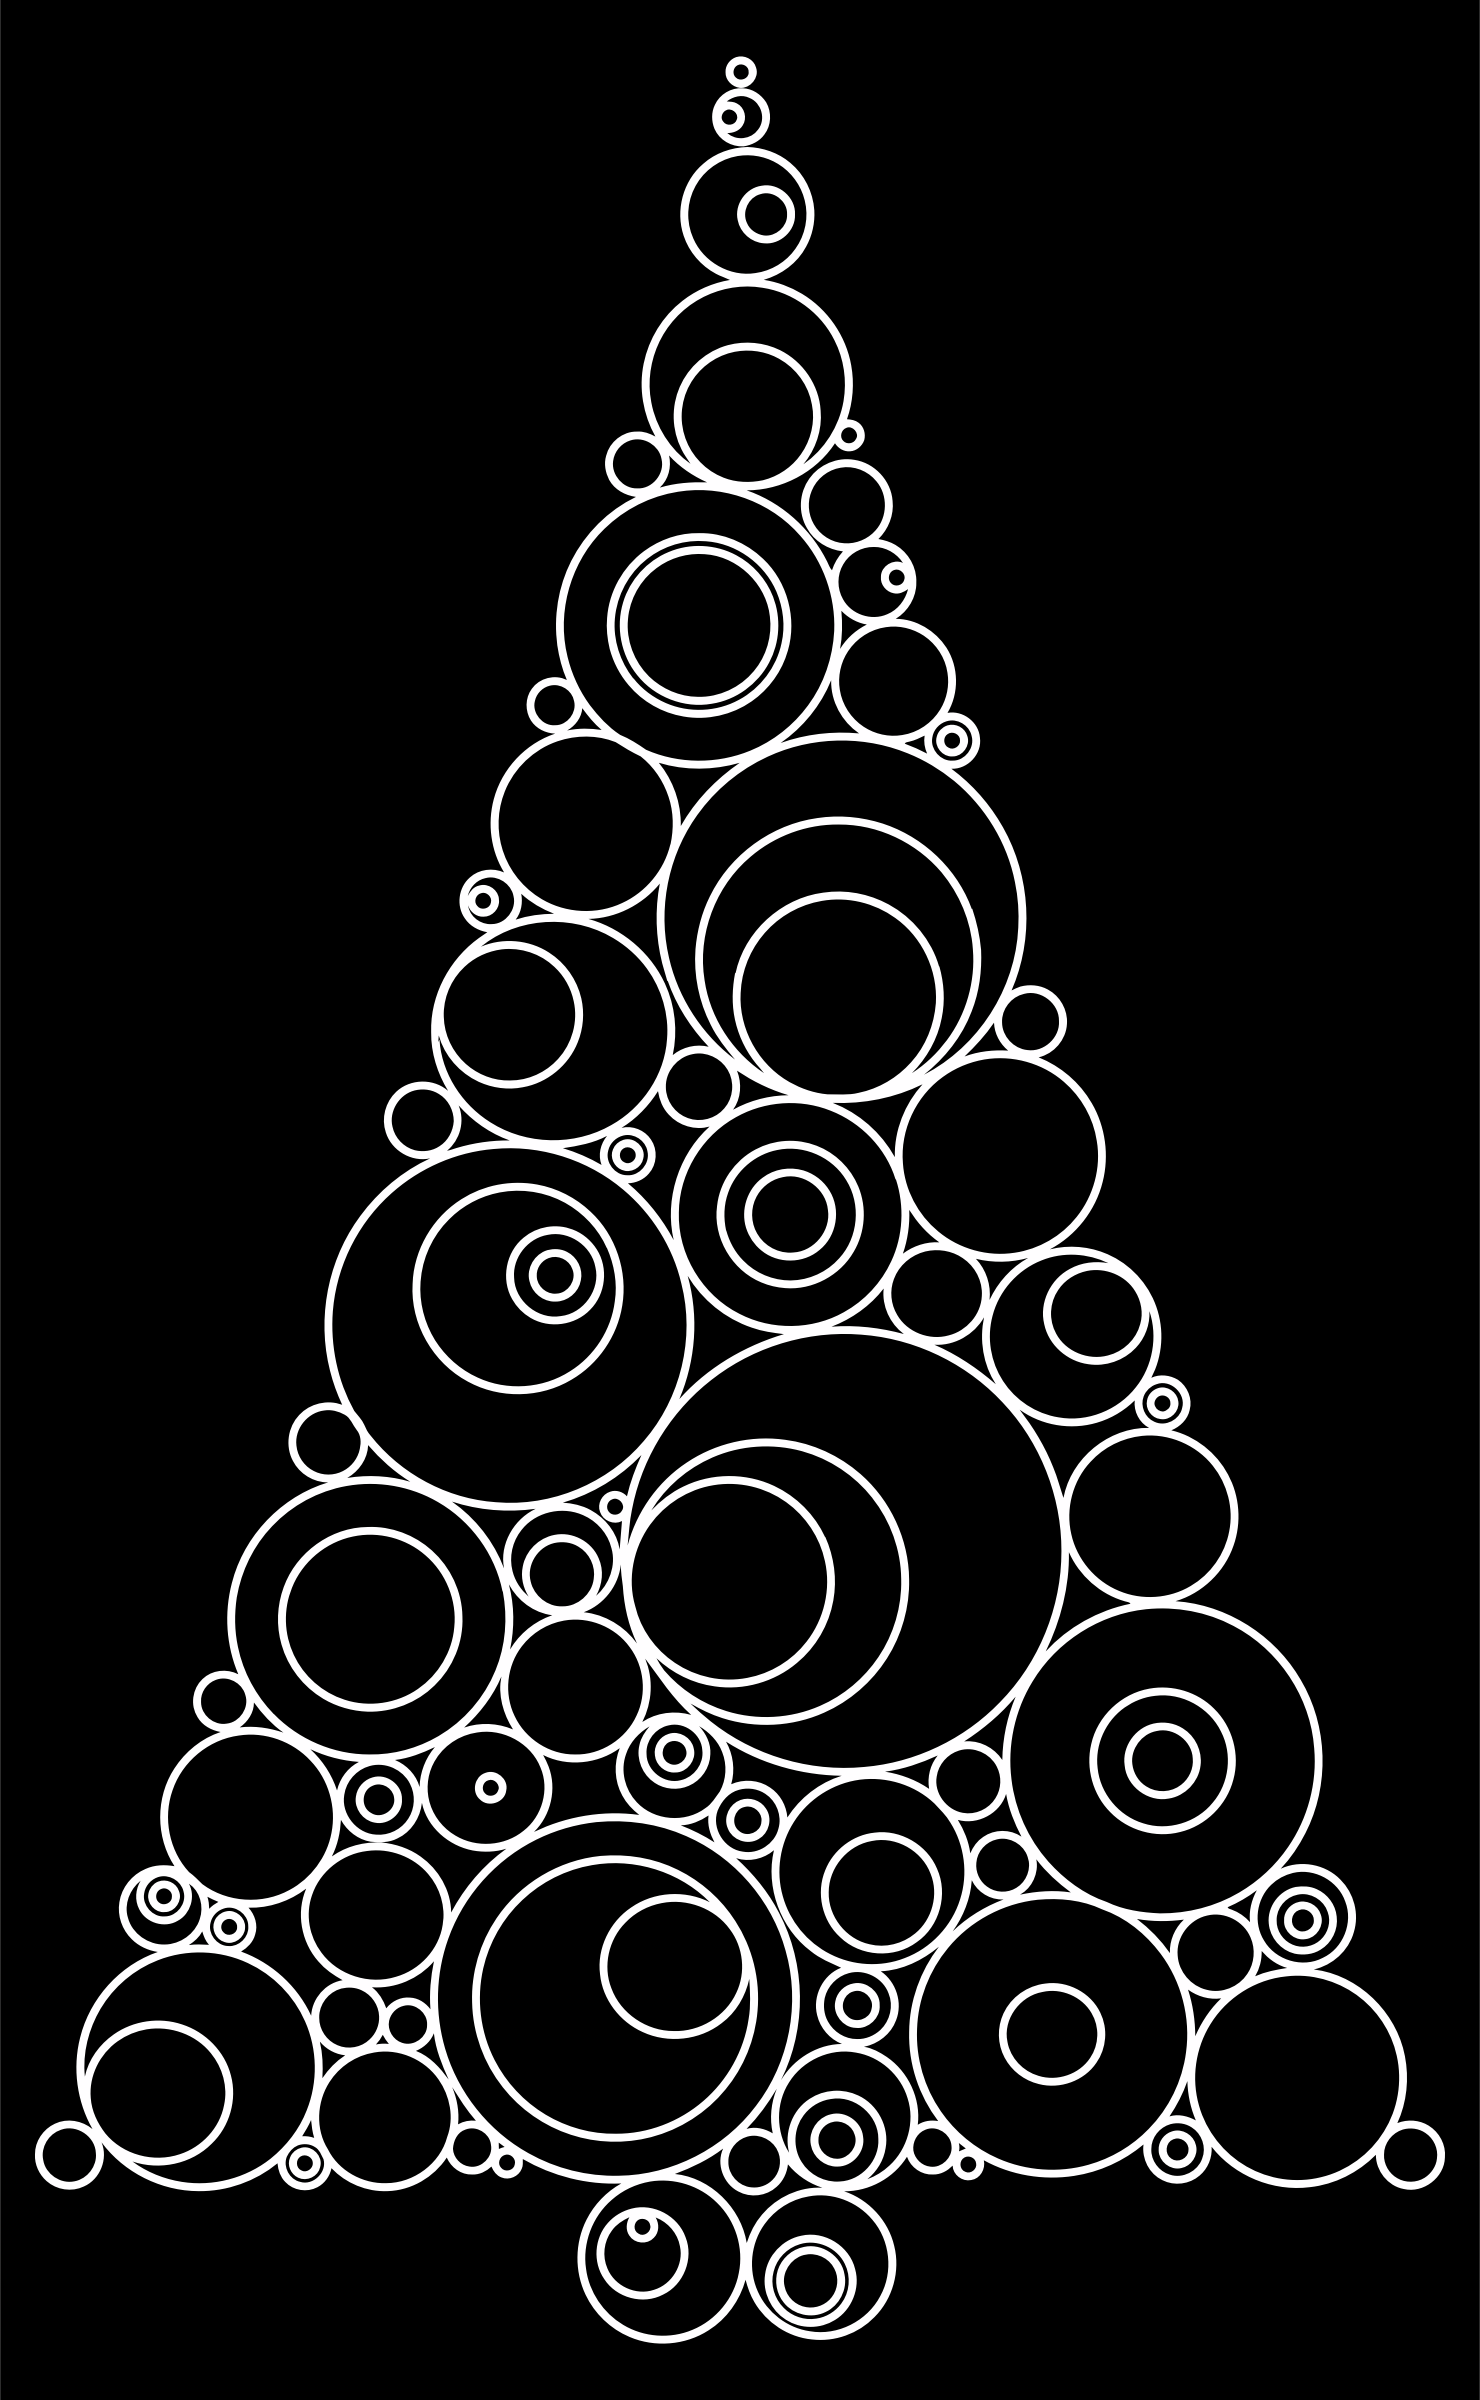 Abstract Circles Christmas Tree By Gdj